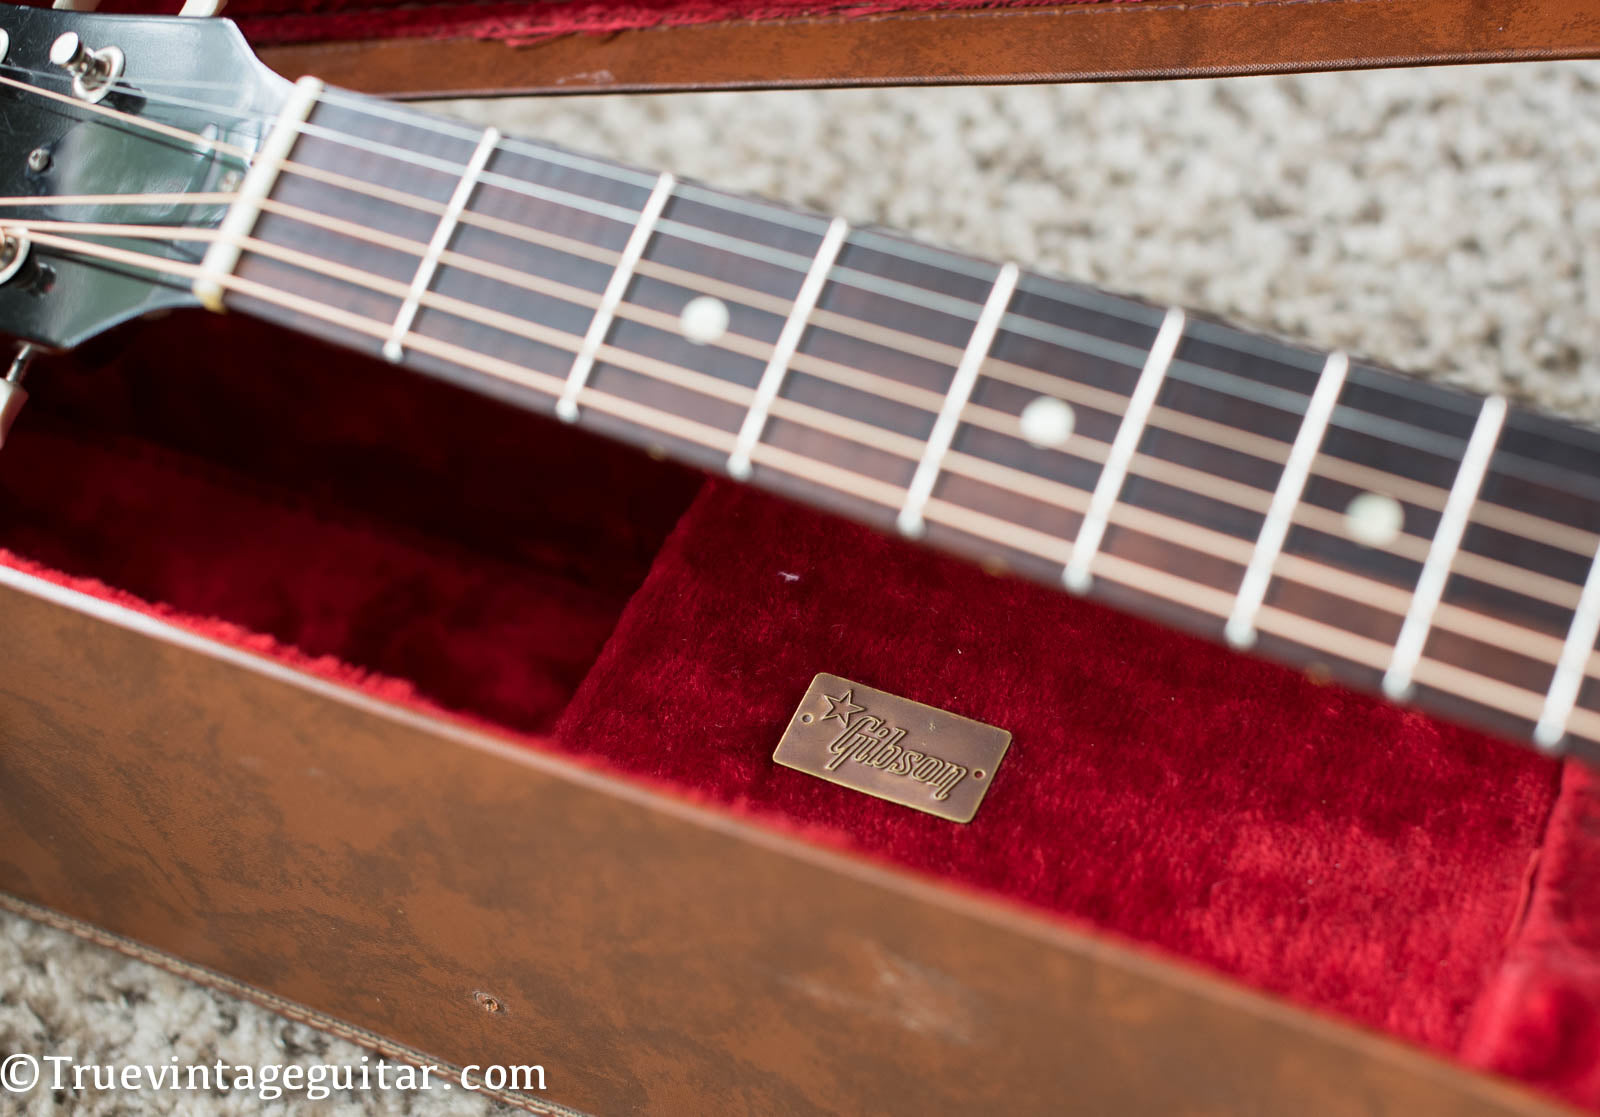 Gibson metal badge case 1962 red velvet brown leather